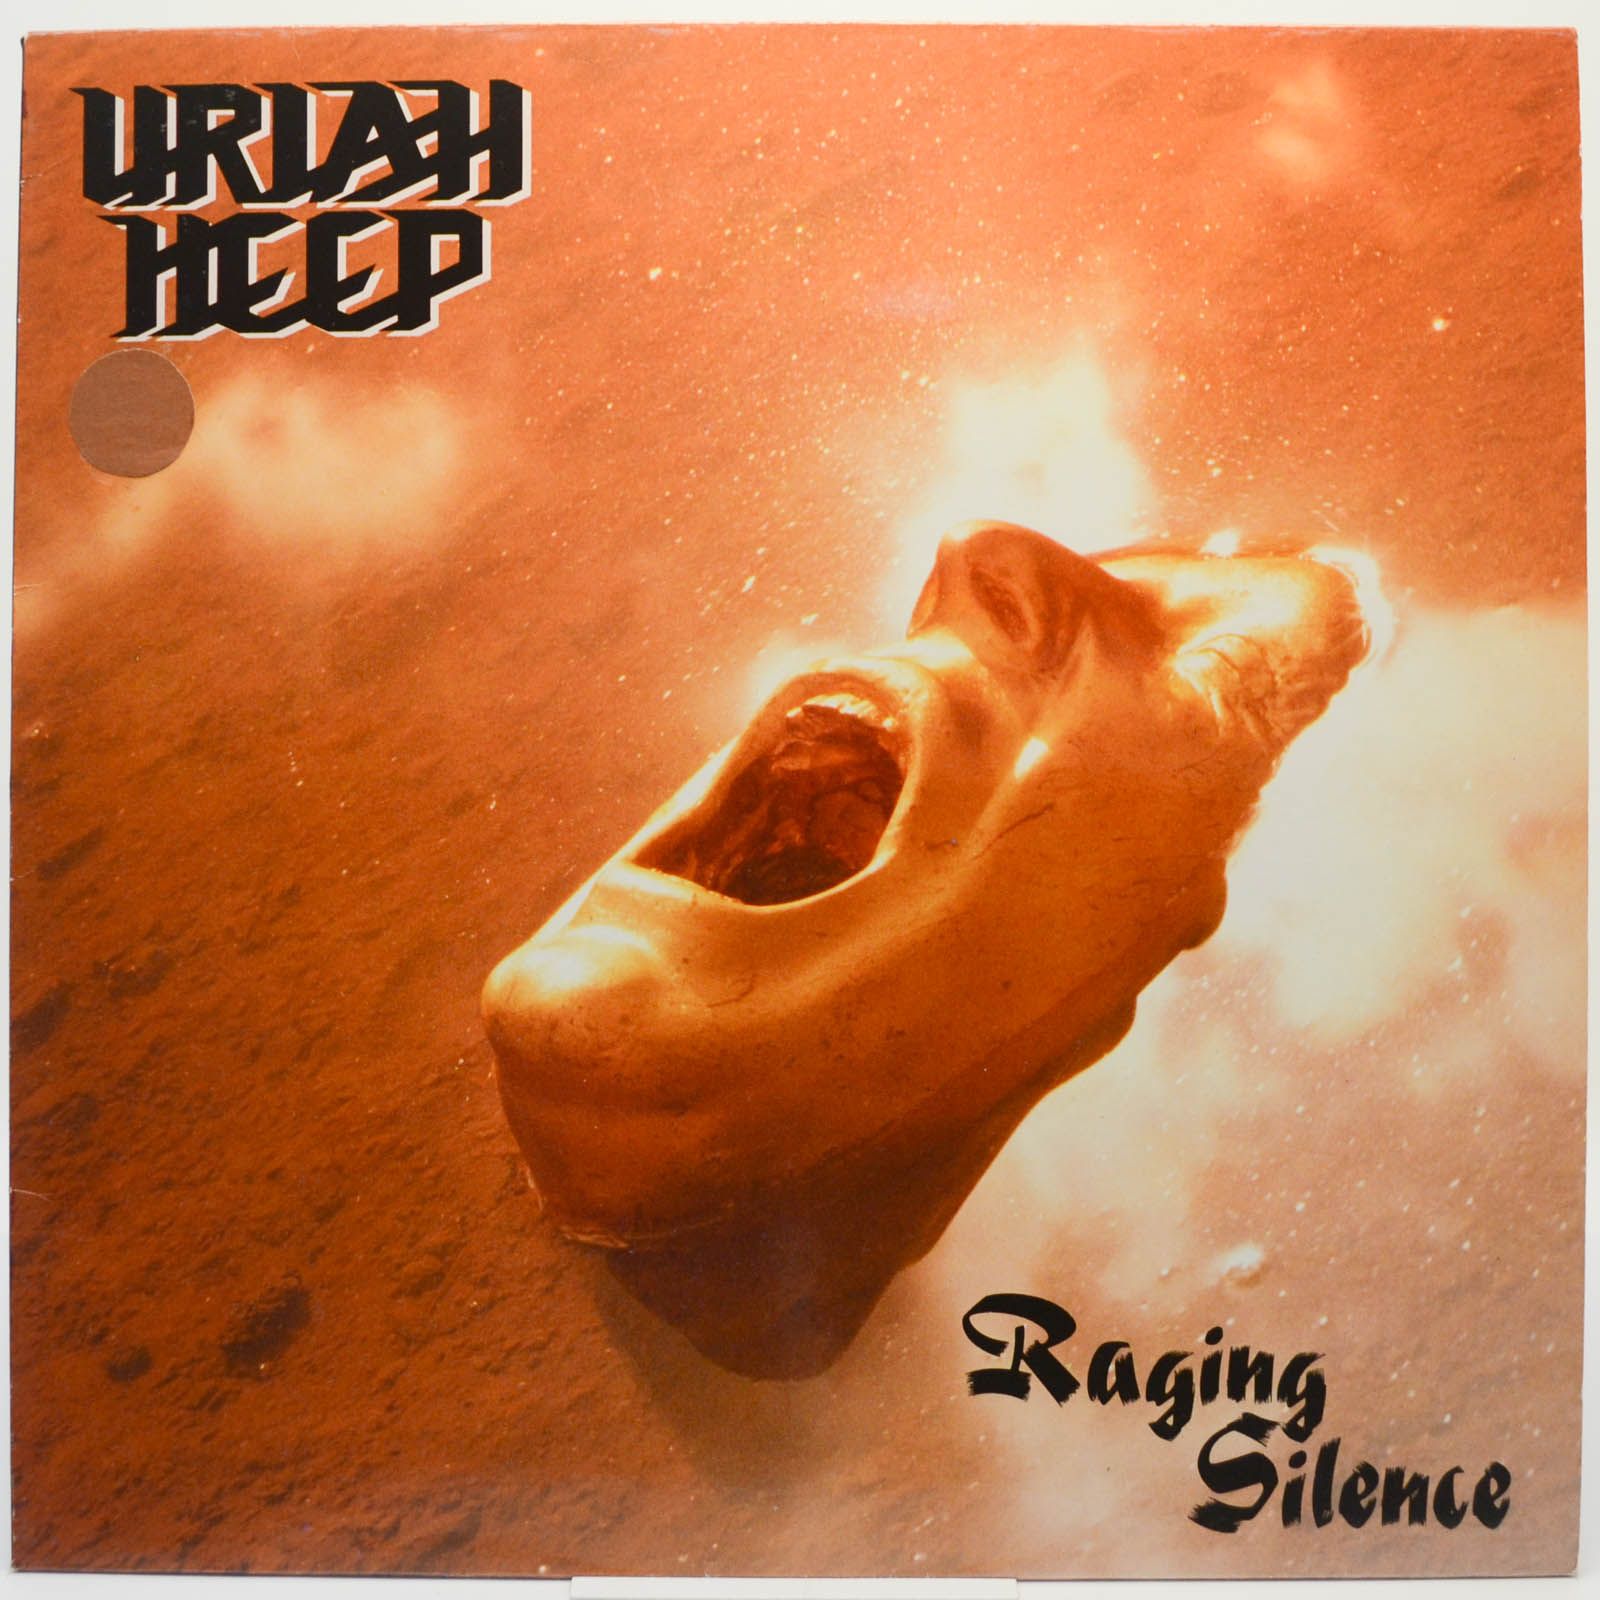 Uriah Heep — Raging Silence, 1989